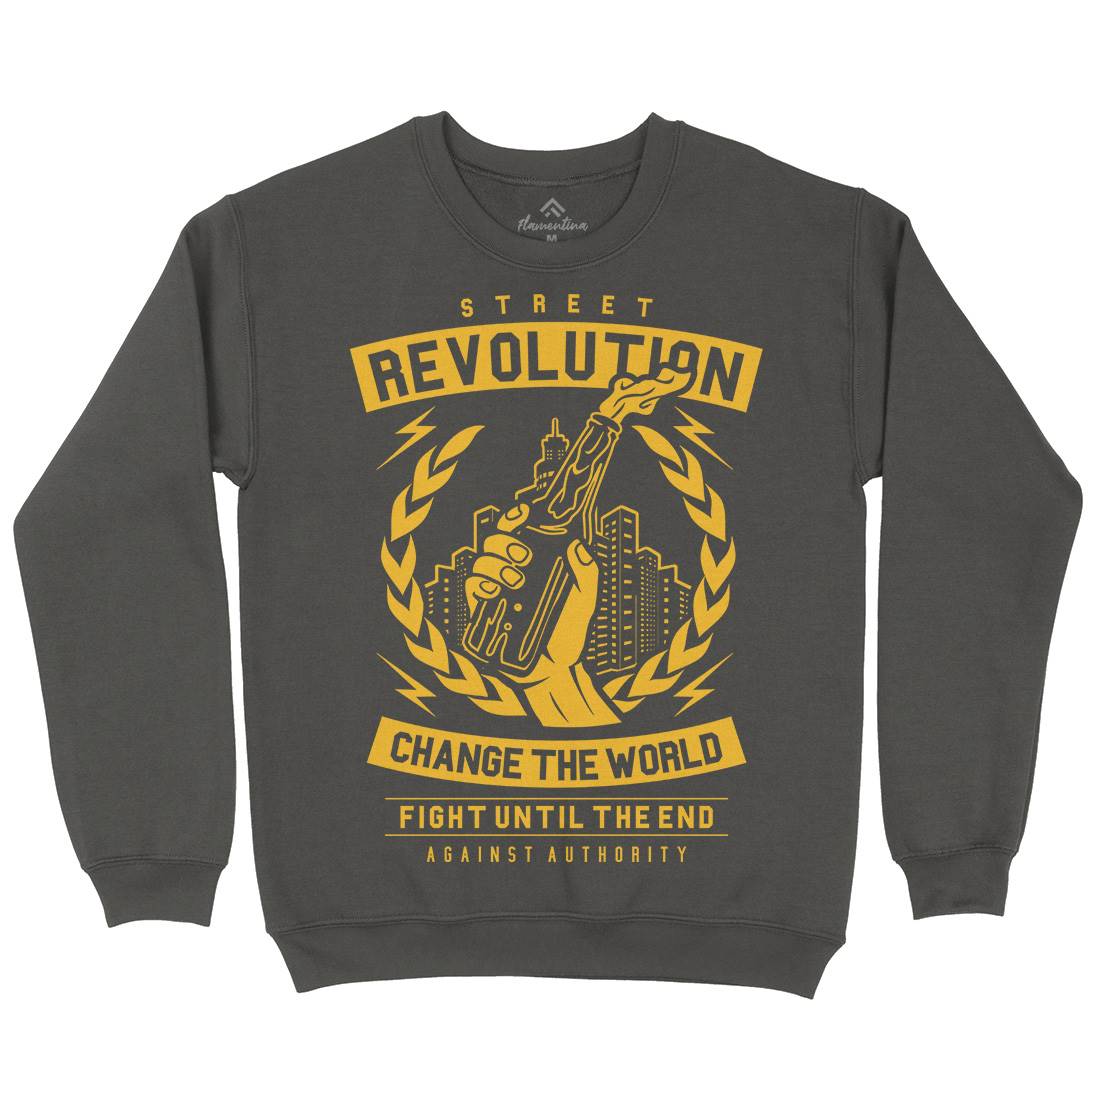 Street Revolution Kids Crew Neck Sweatshirt Quotes A287